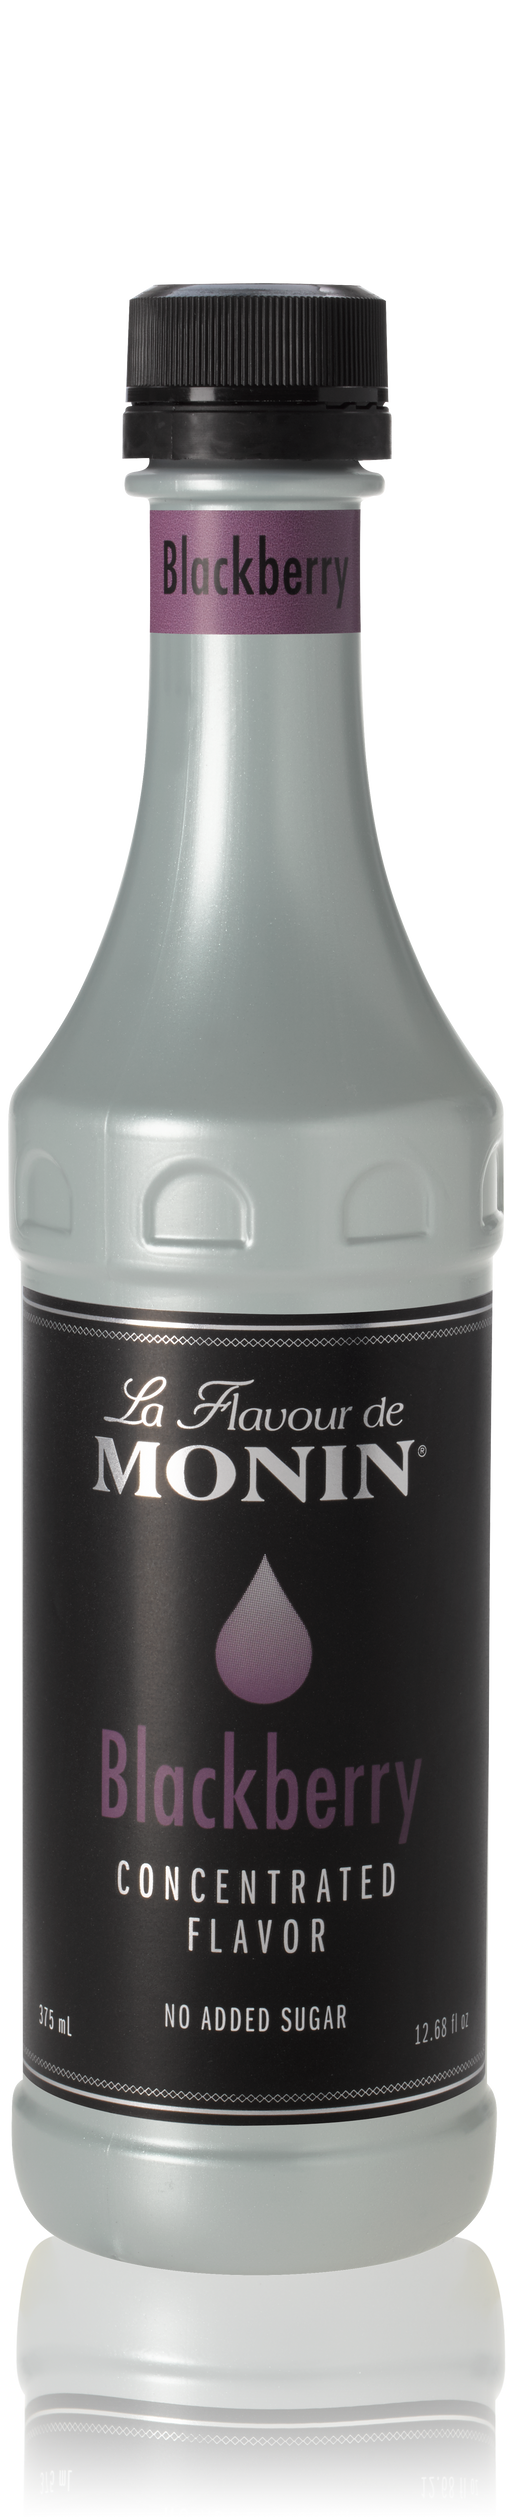 Monin Blackberry Concentrated Flavor 375mL Bottle